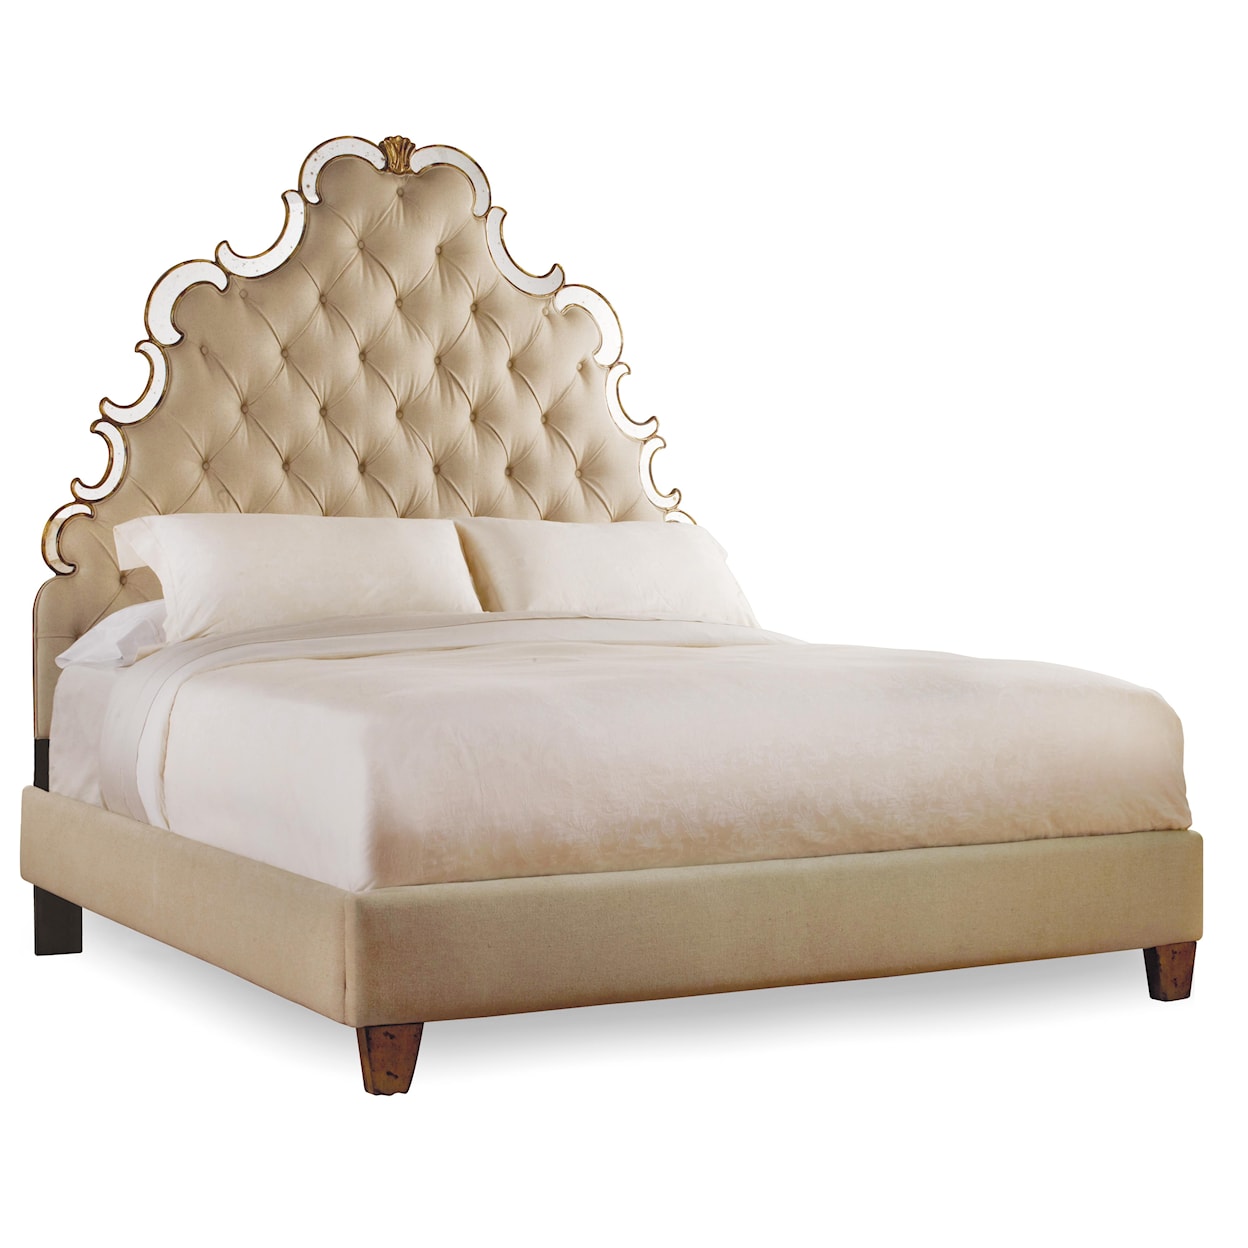 Hooker Furniture Sanctuary California King Tufted Bed - Bling